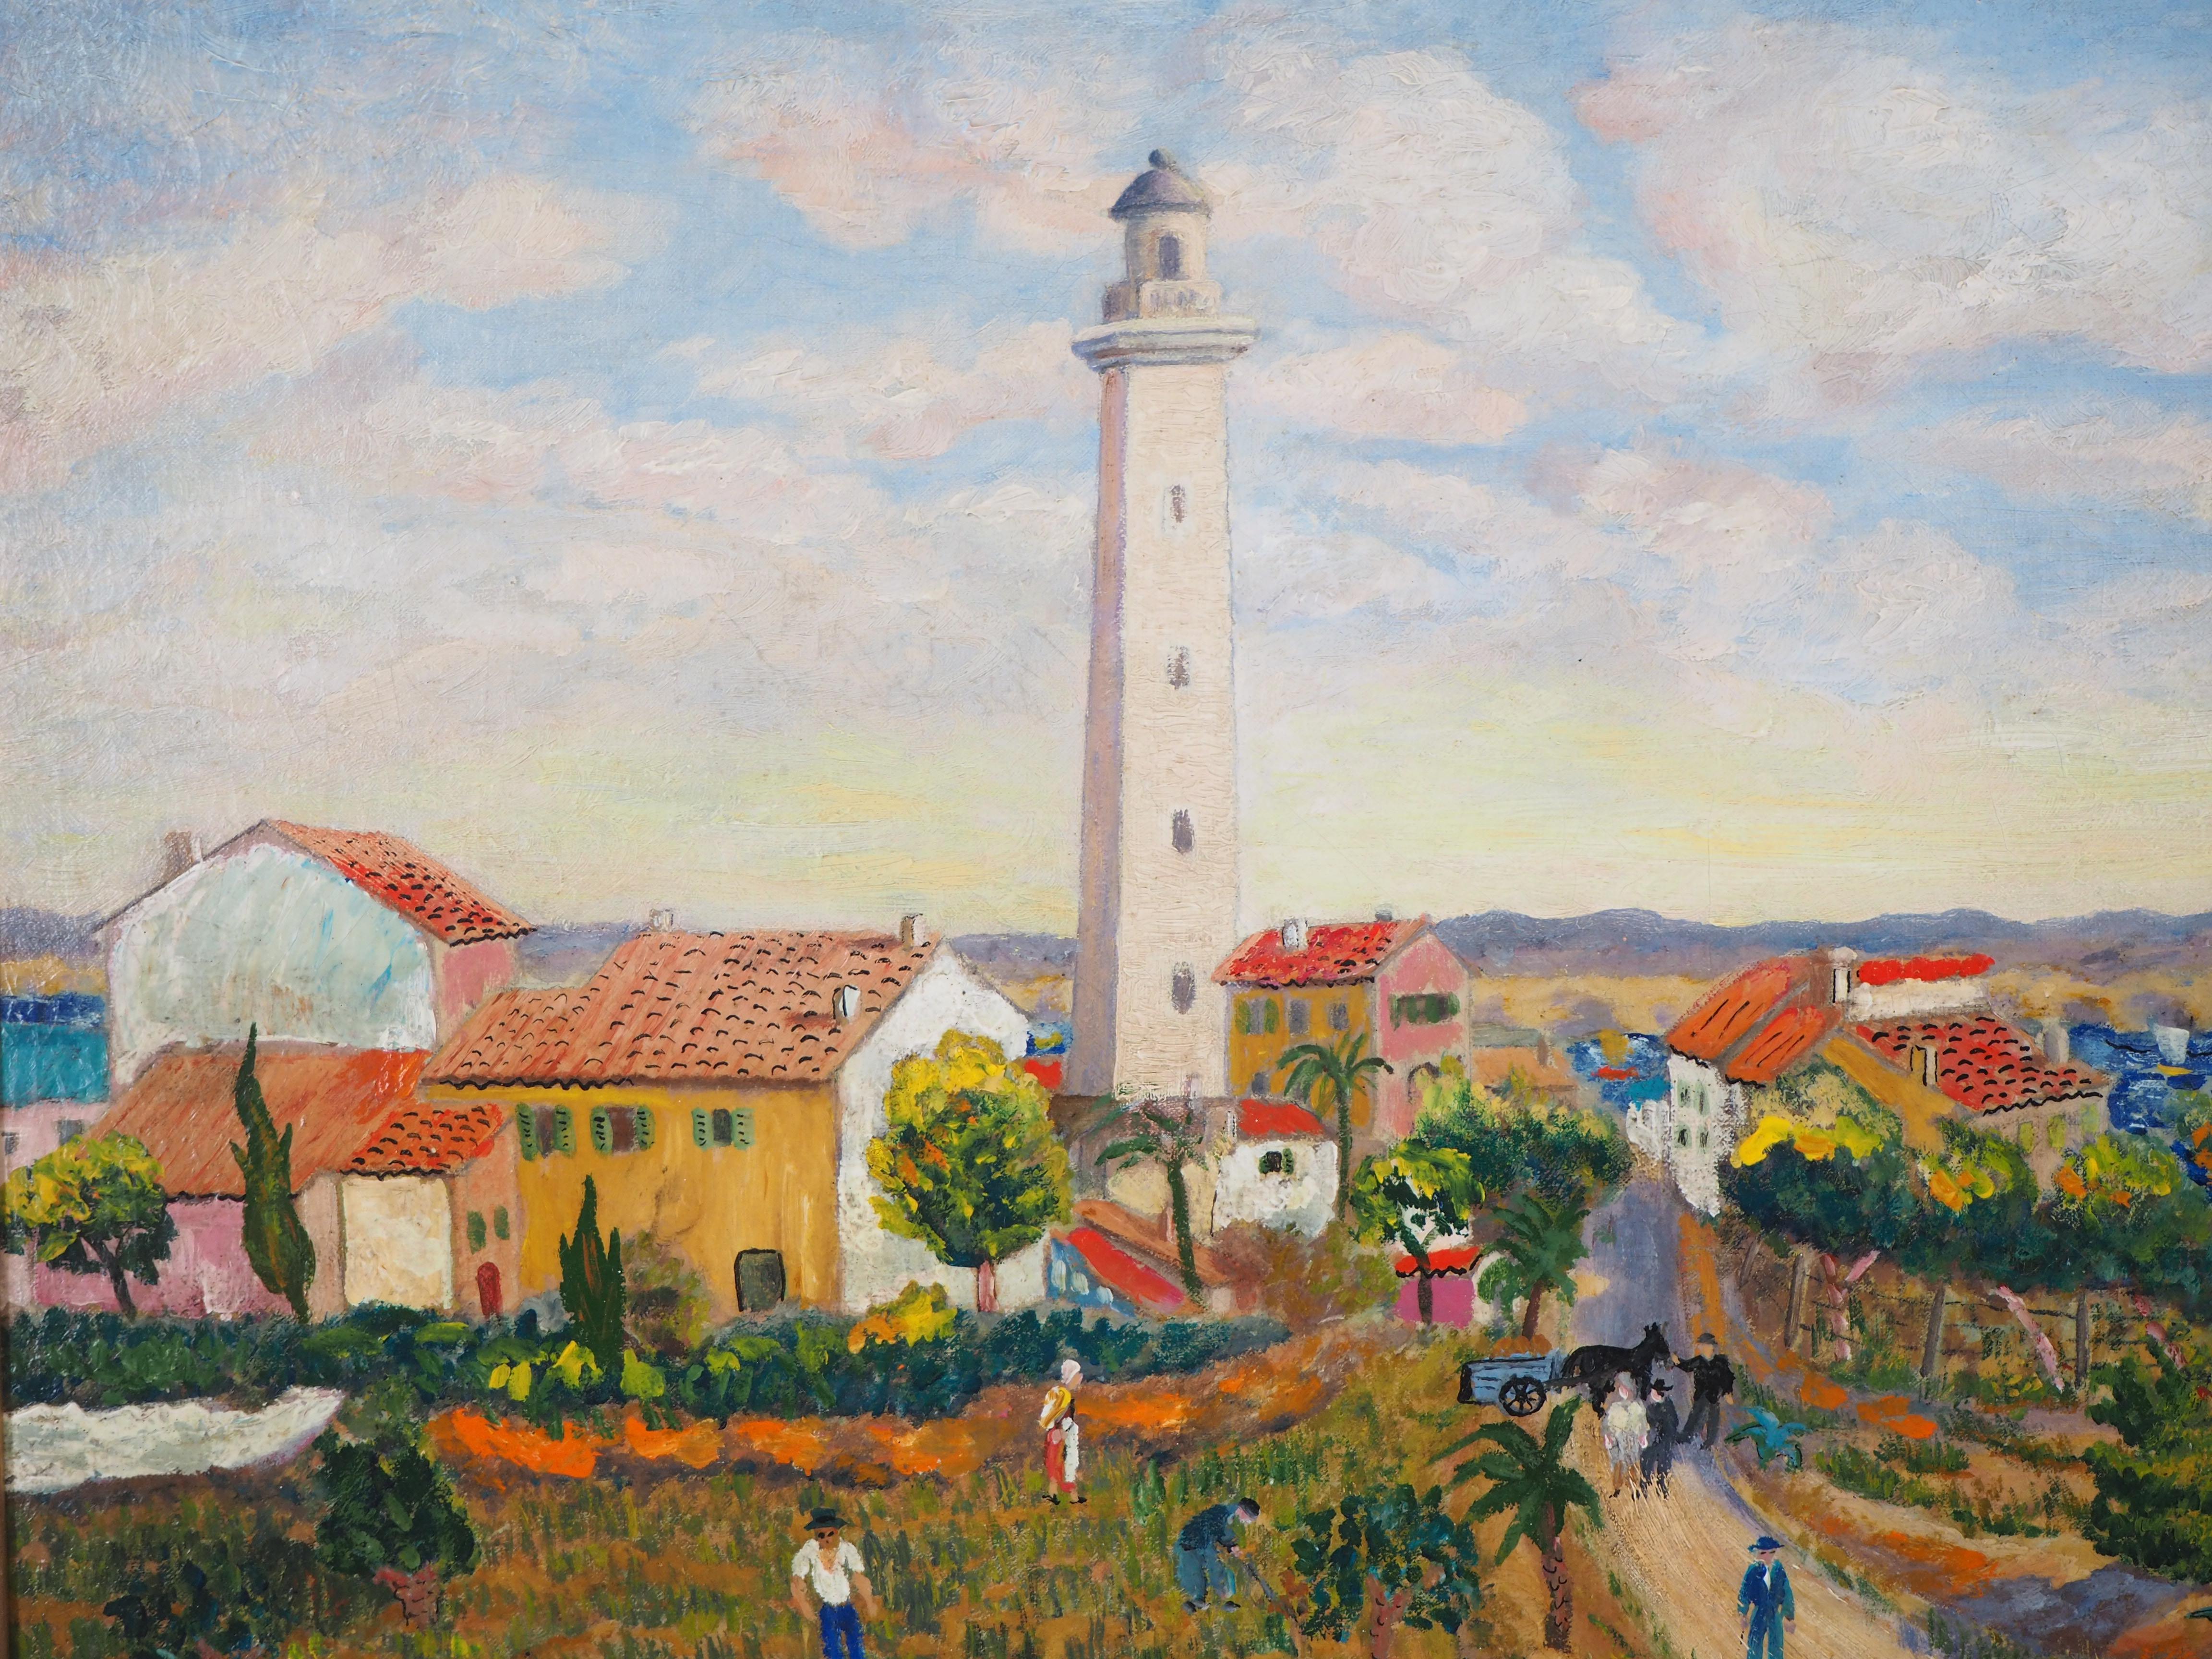 Landscape with a Lighthouse - Original Oil on Canvas, Handsigned, c. 1930 1